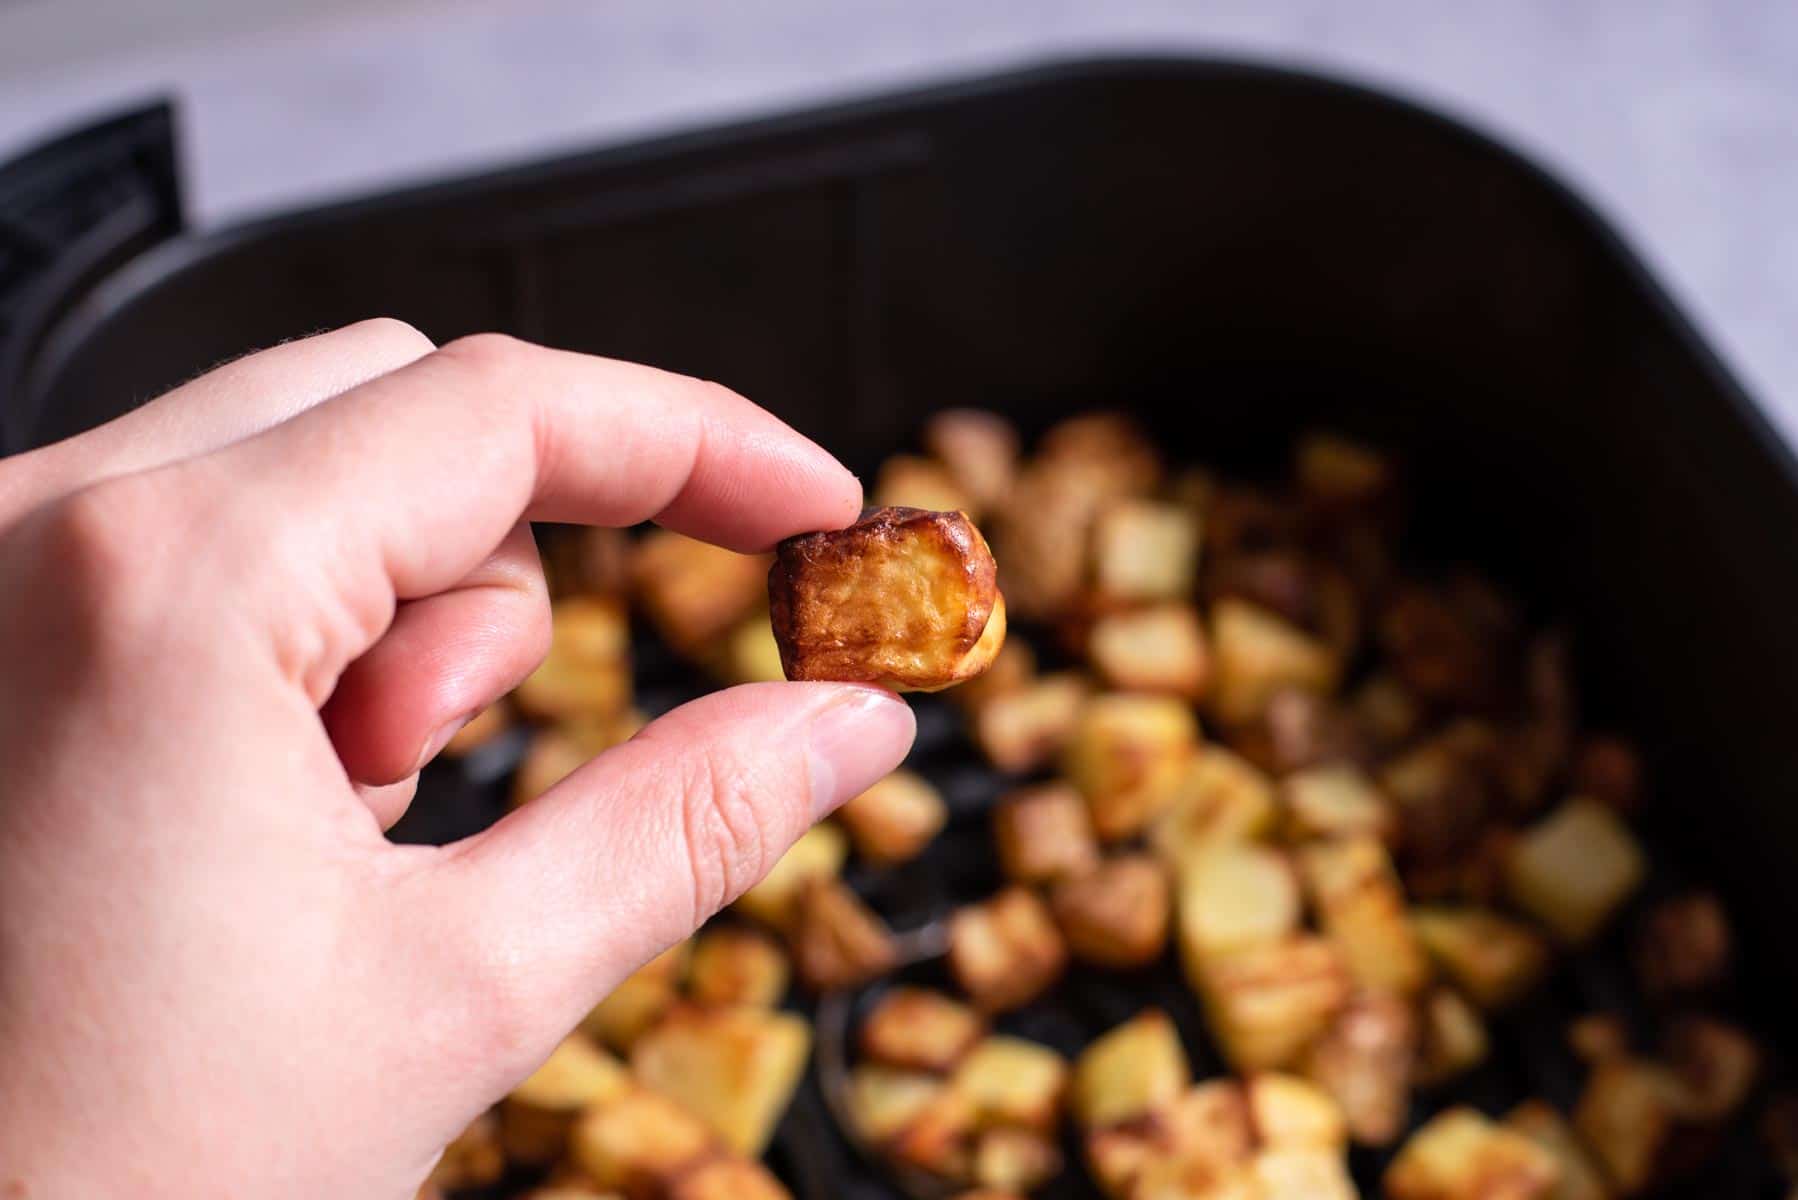 Fingers pinching one roasted potato.